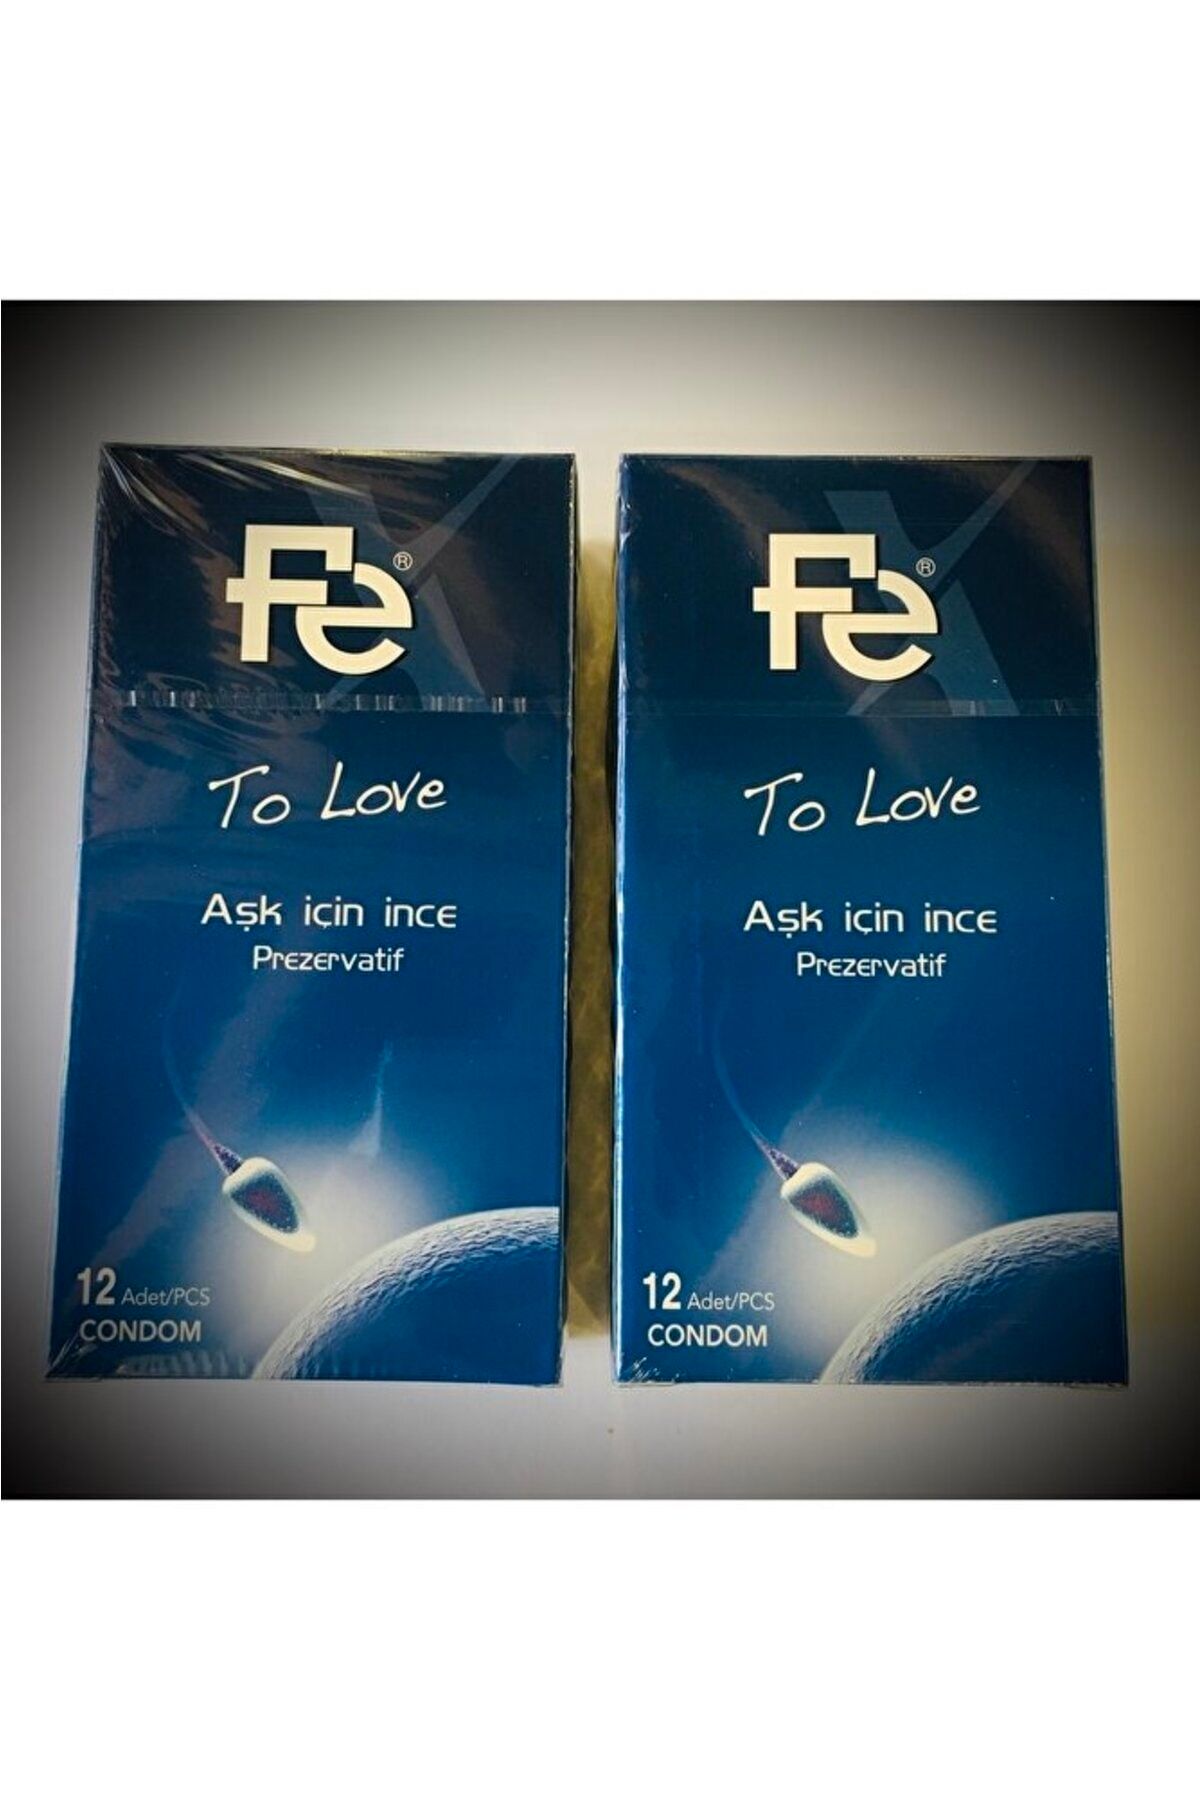 Fe To Love Prezervatif 12 Adetli 2 Kutu